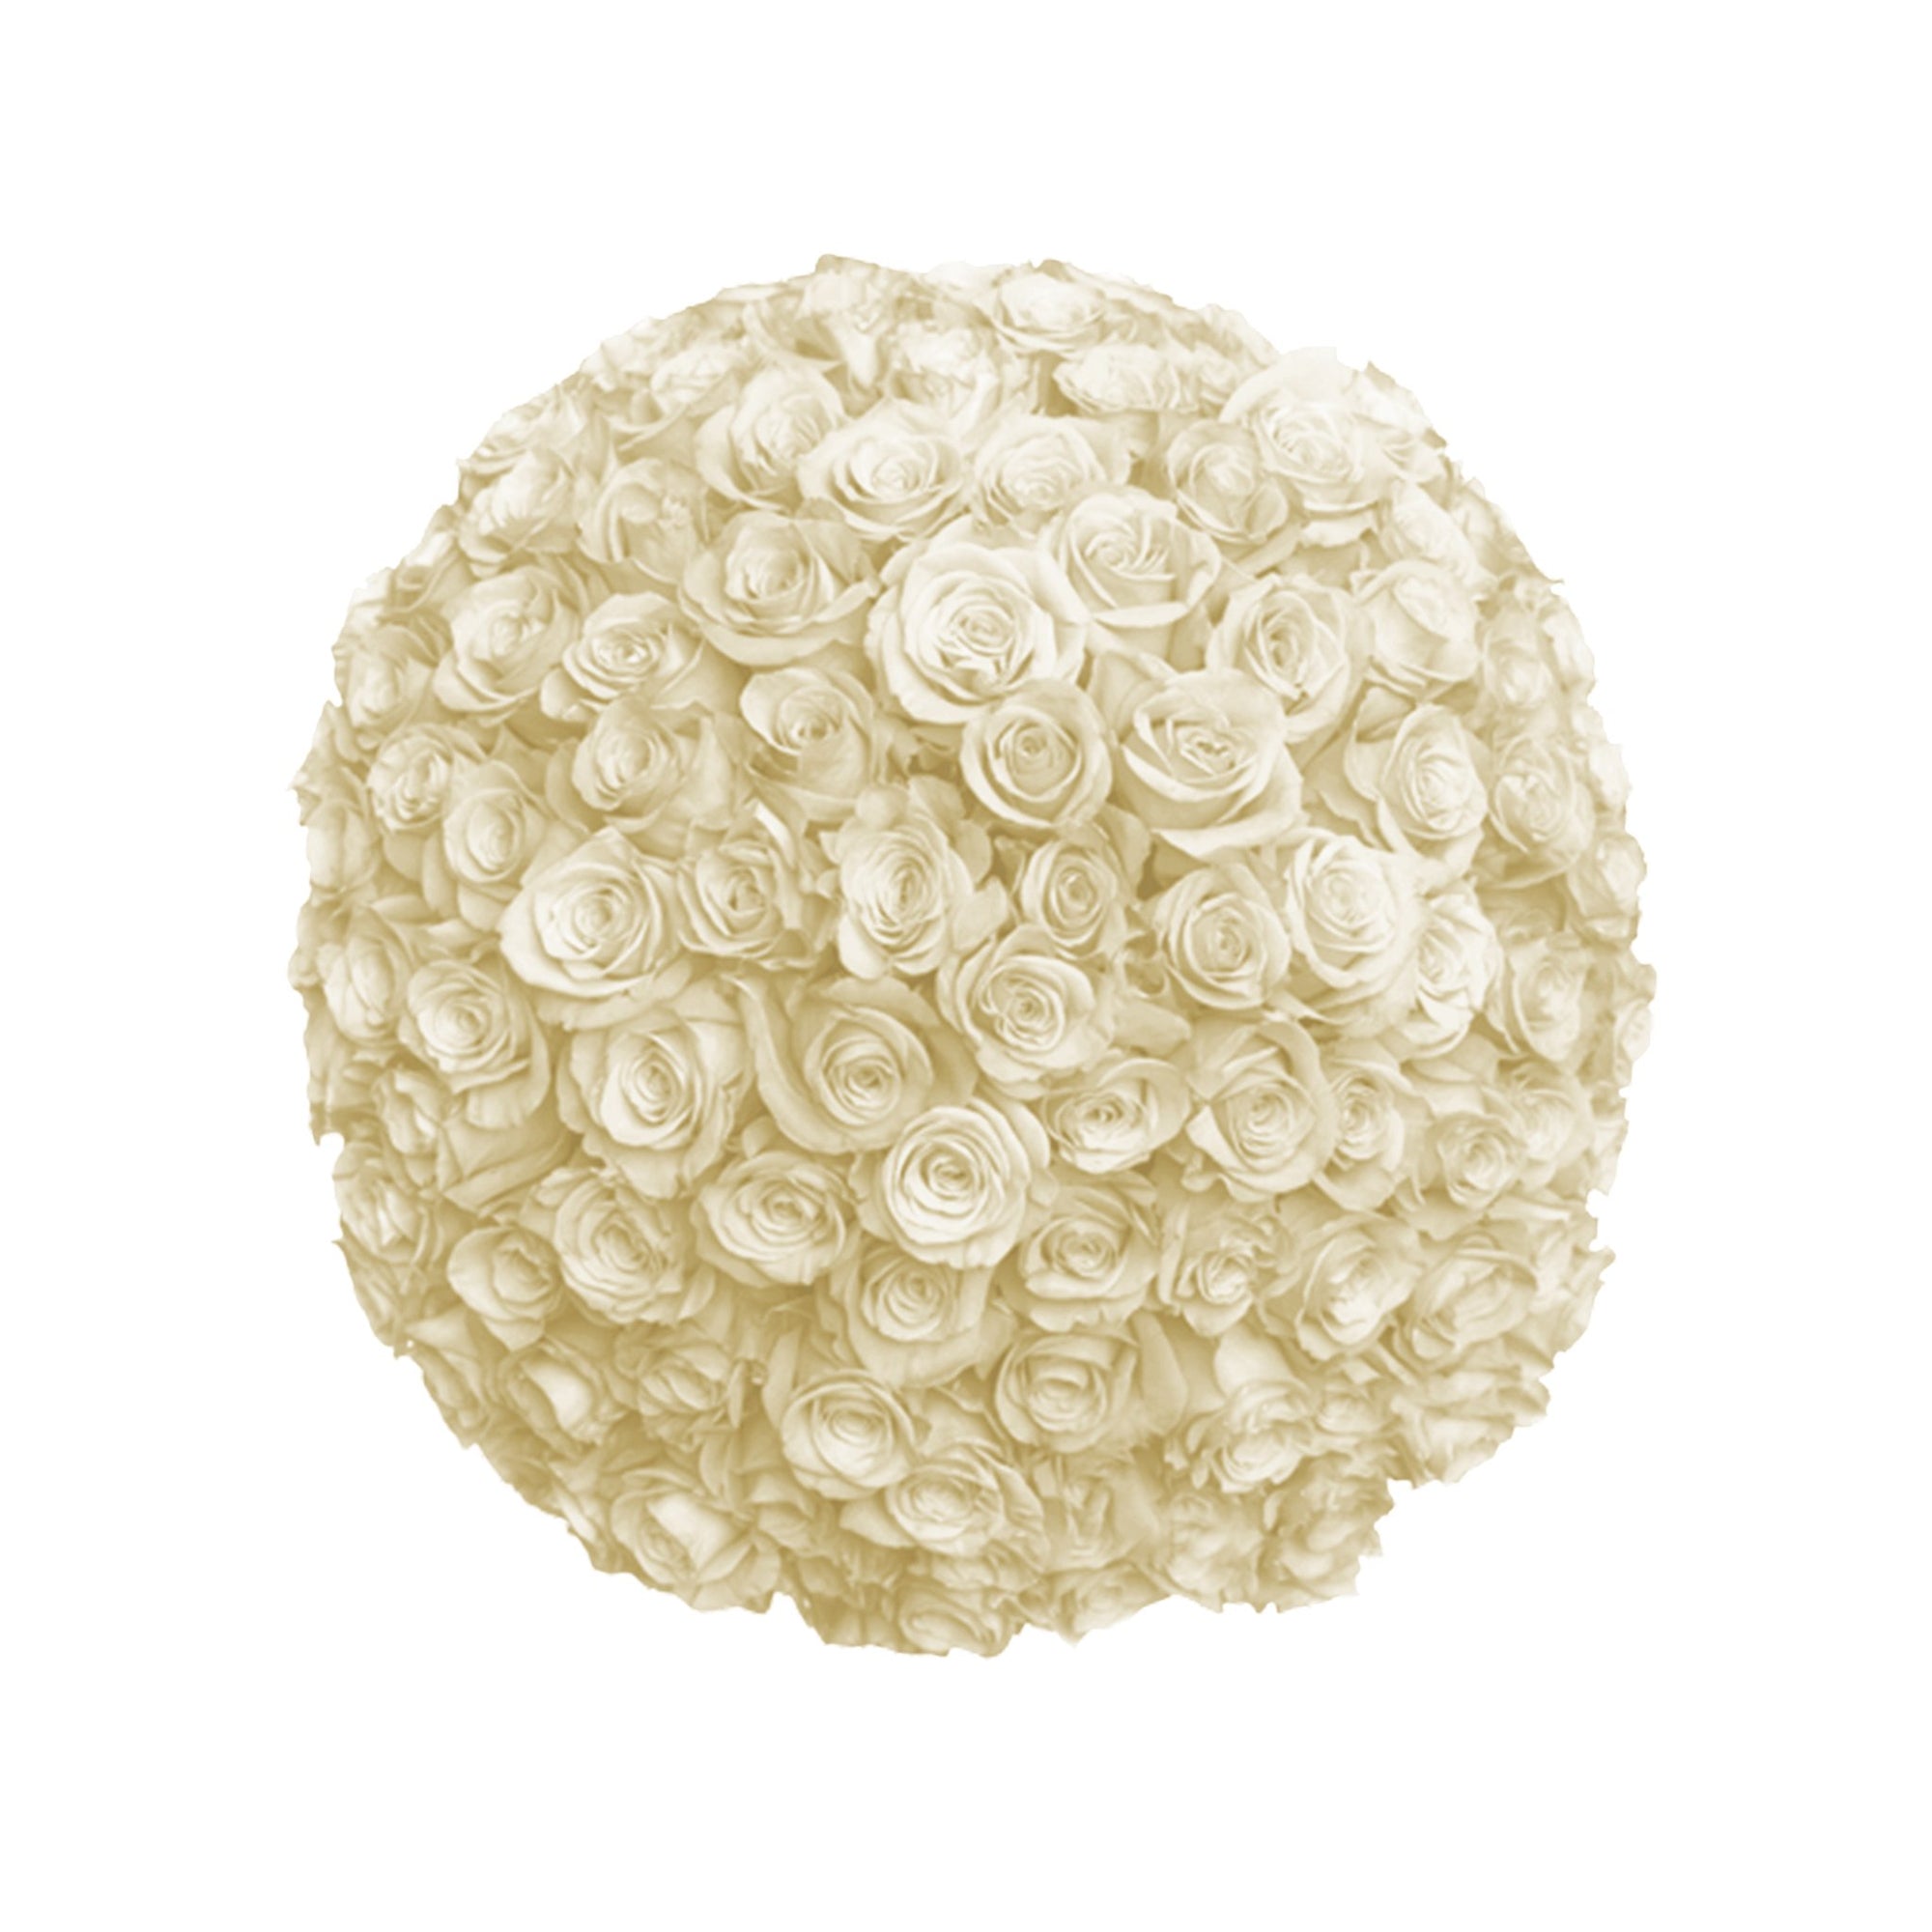 Manhattan Flower Delivery - Fresh Roses in a Vase | 100 White Roses - Roses